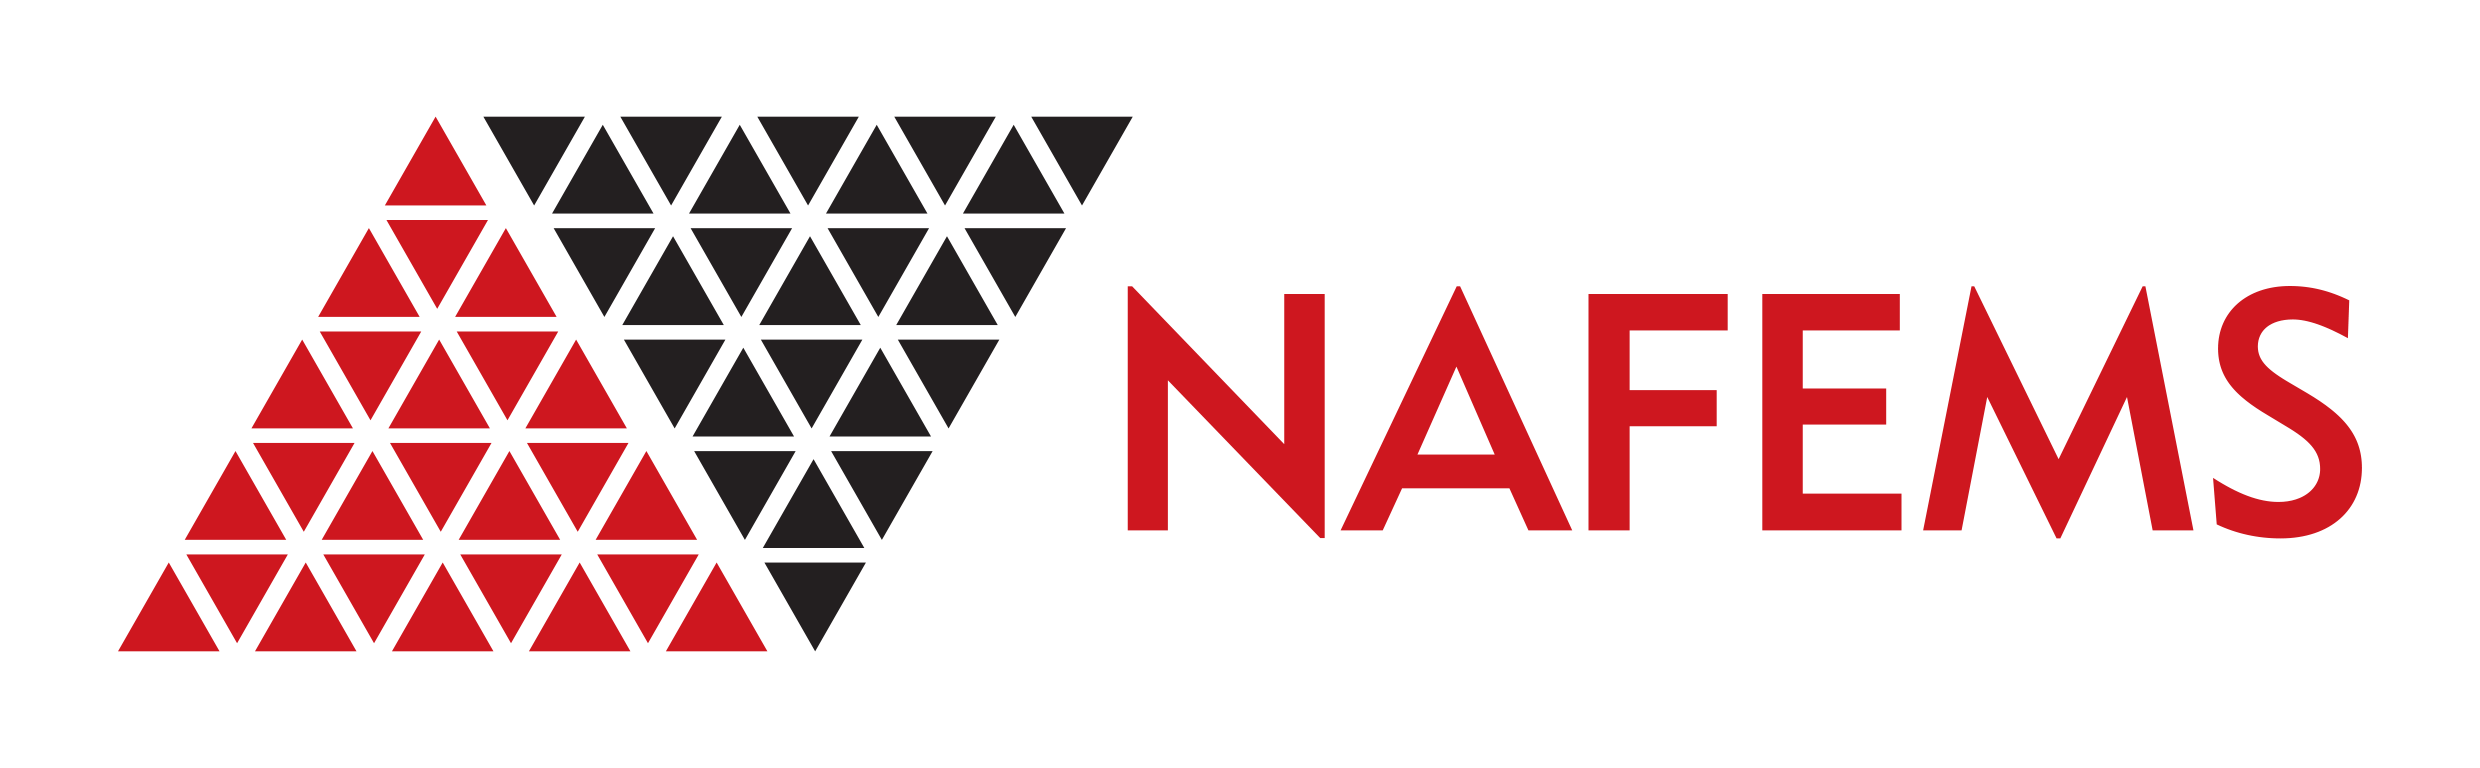 NAFEMS logo in colour